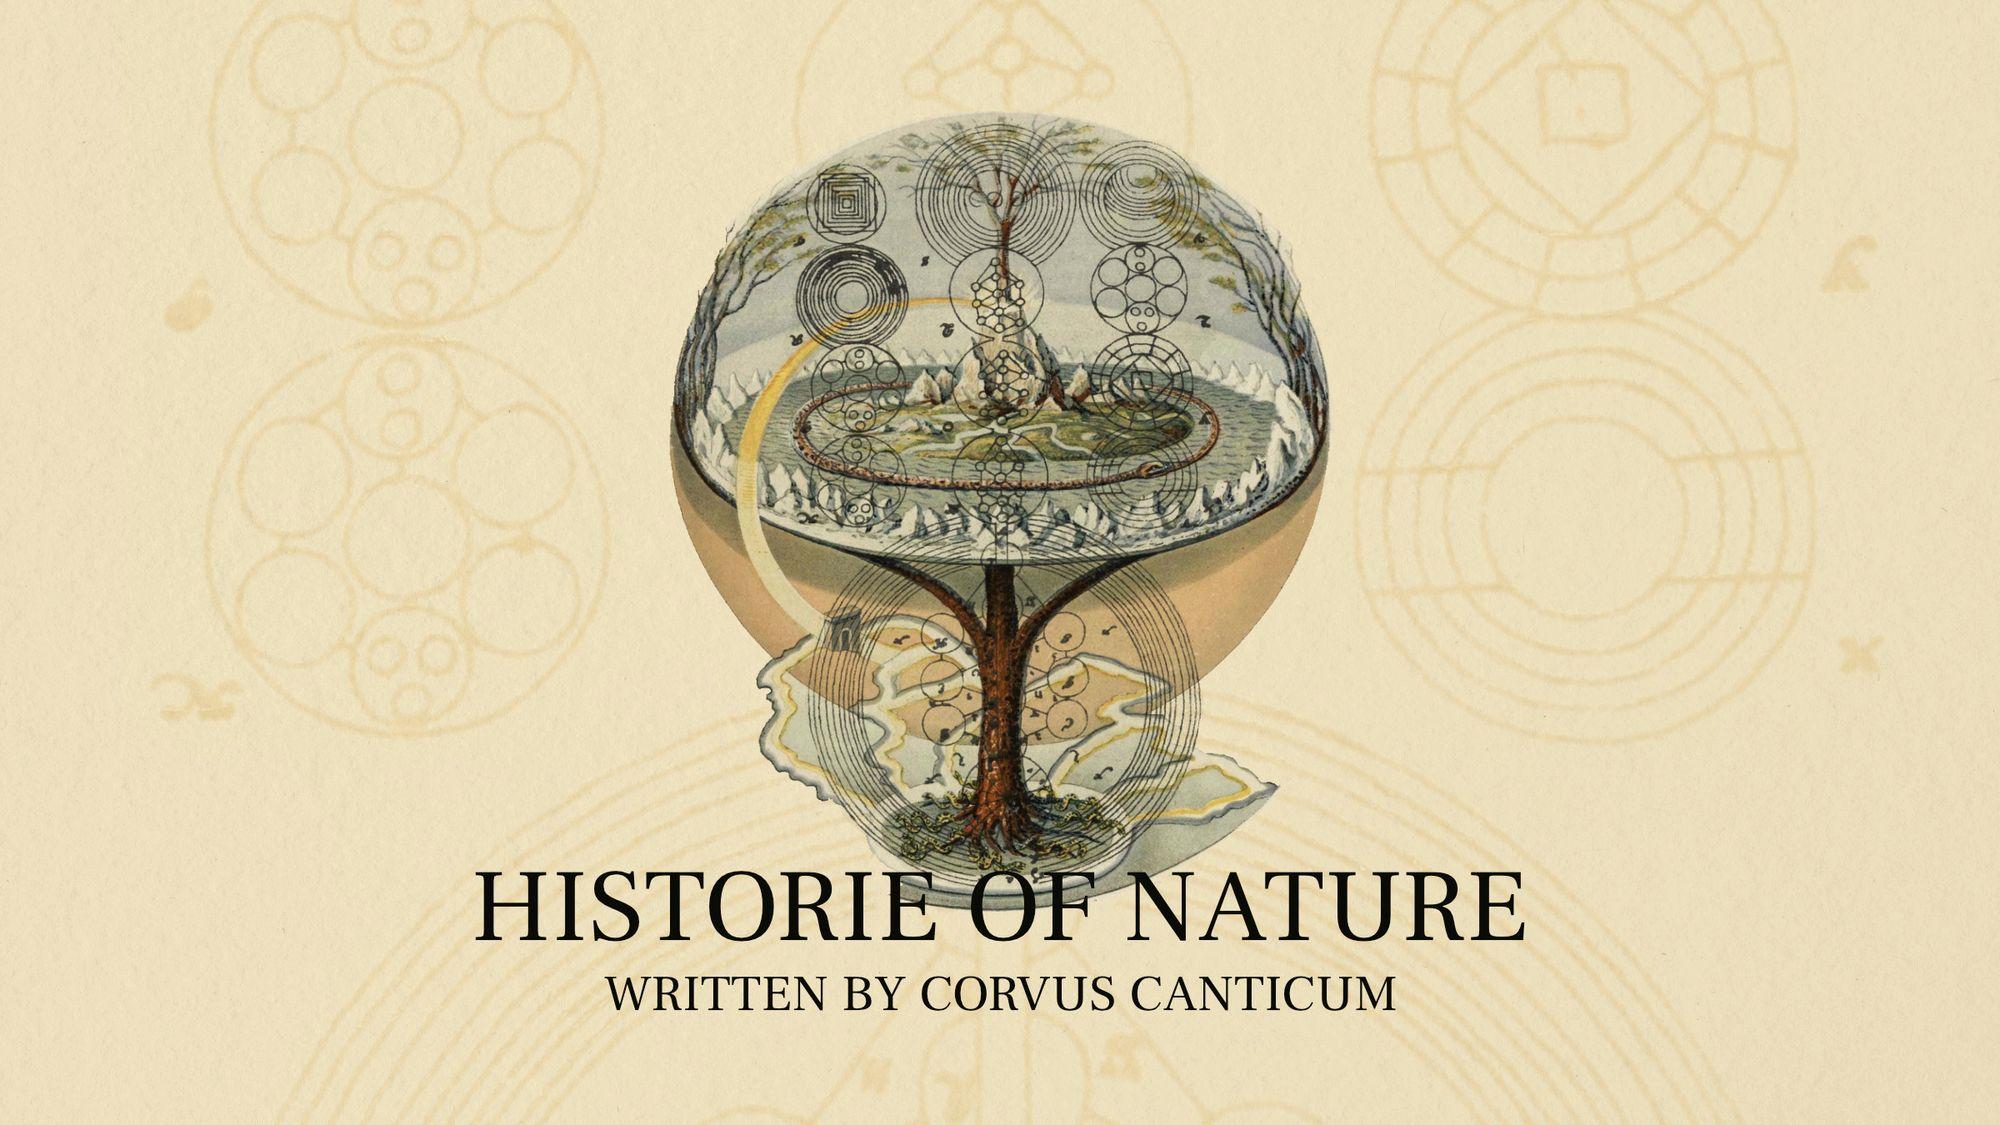 Corvus Canticum's Natural History.